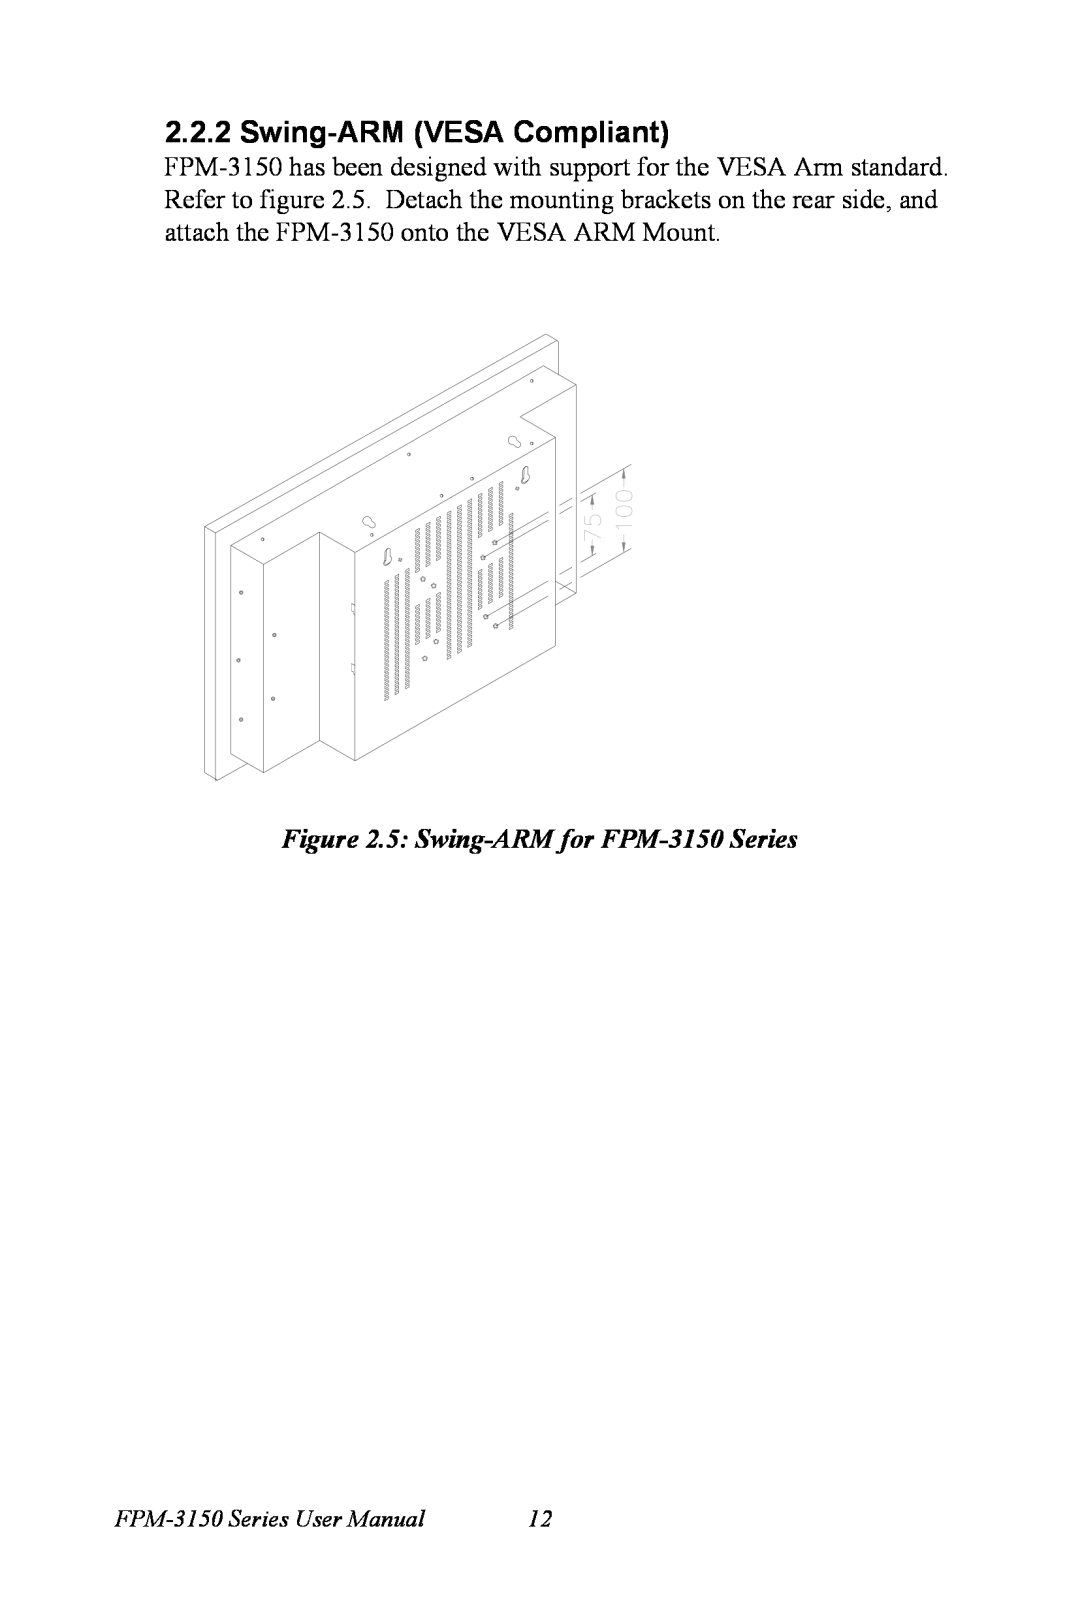 Advantech user manual Swing-ARM VESA Compliant, 5 Swing-ARM for FPM-3150 Series, FPM-3150 Series User Manual 